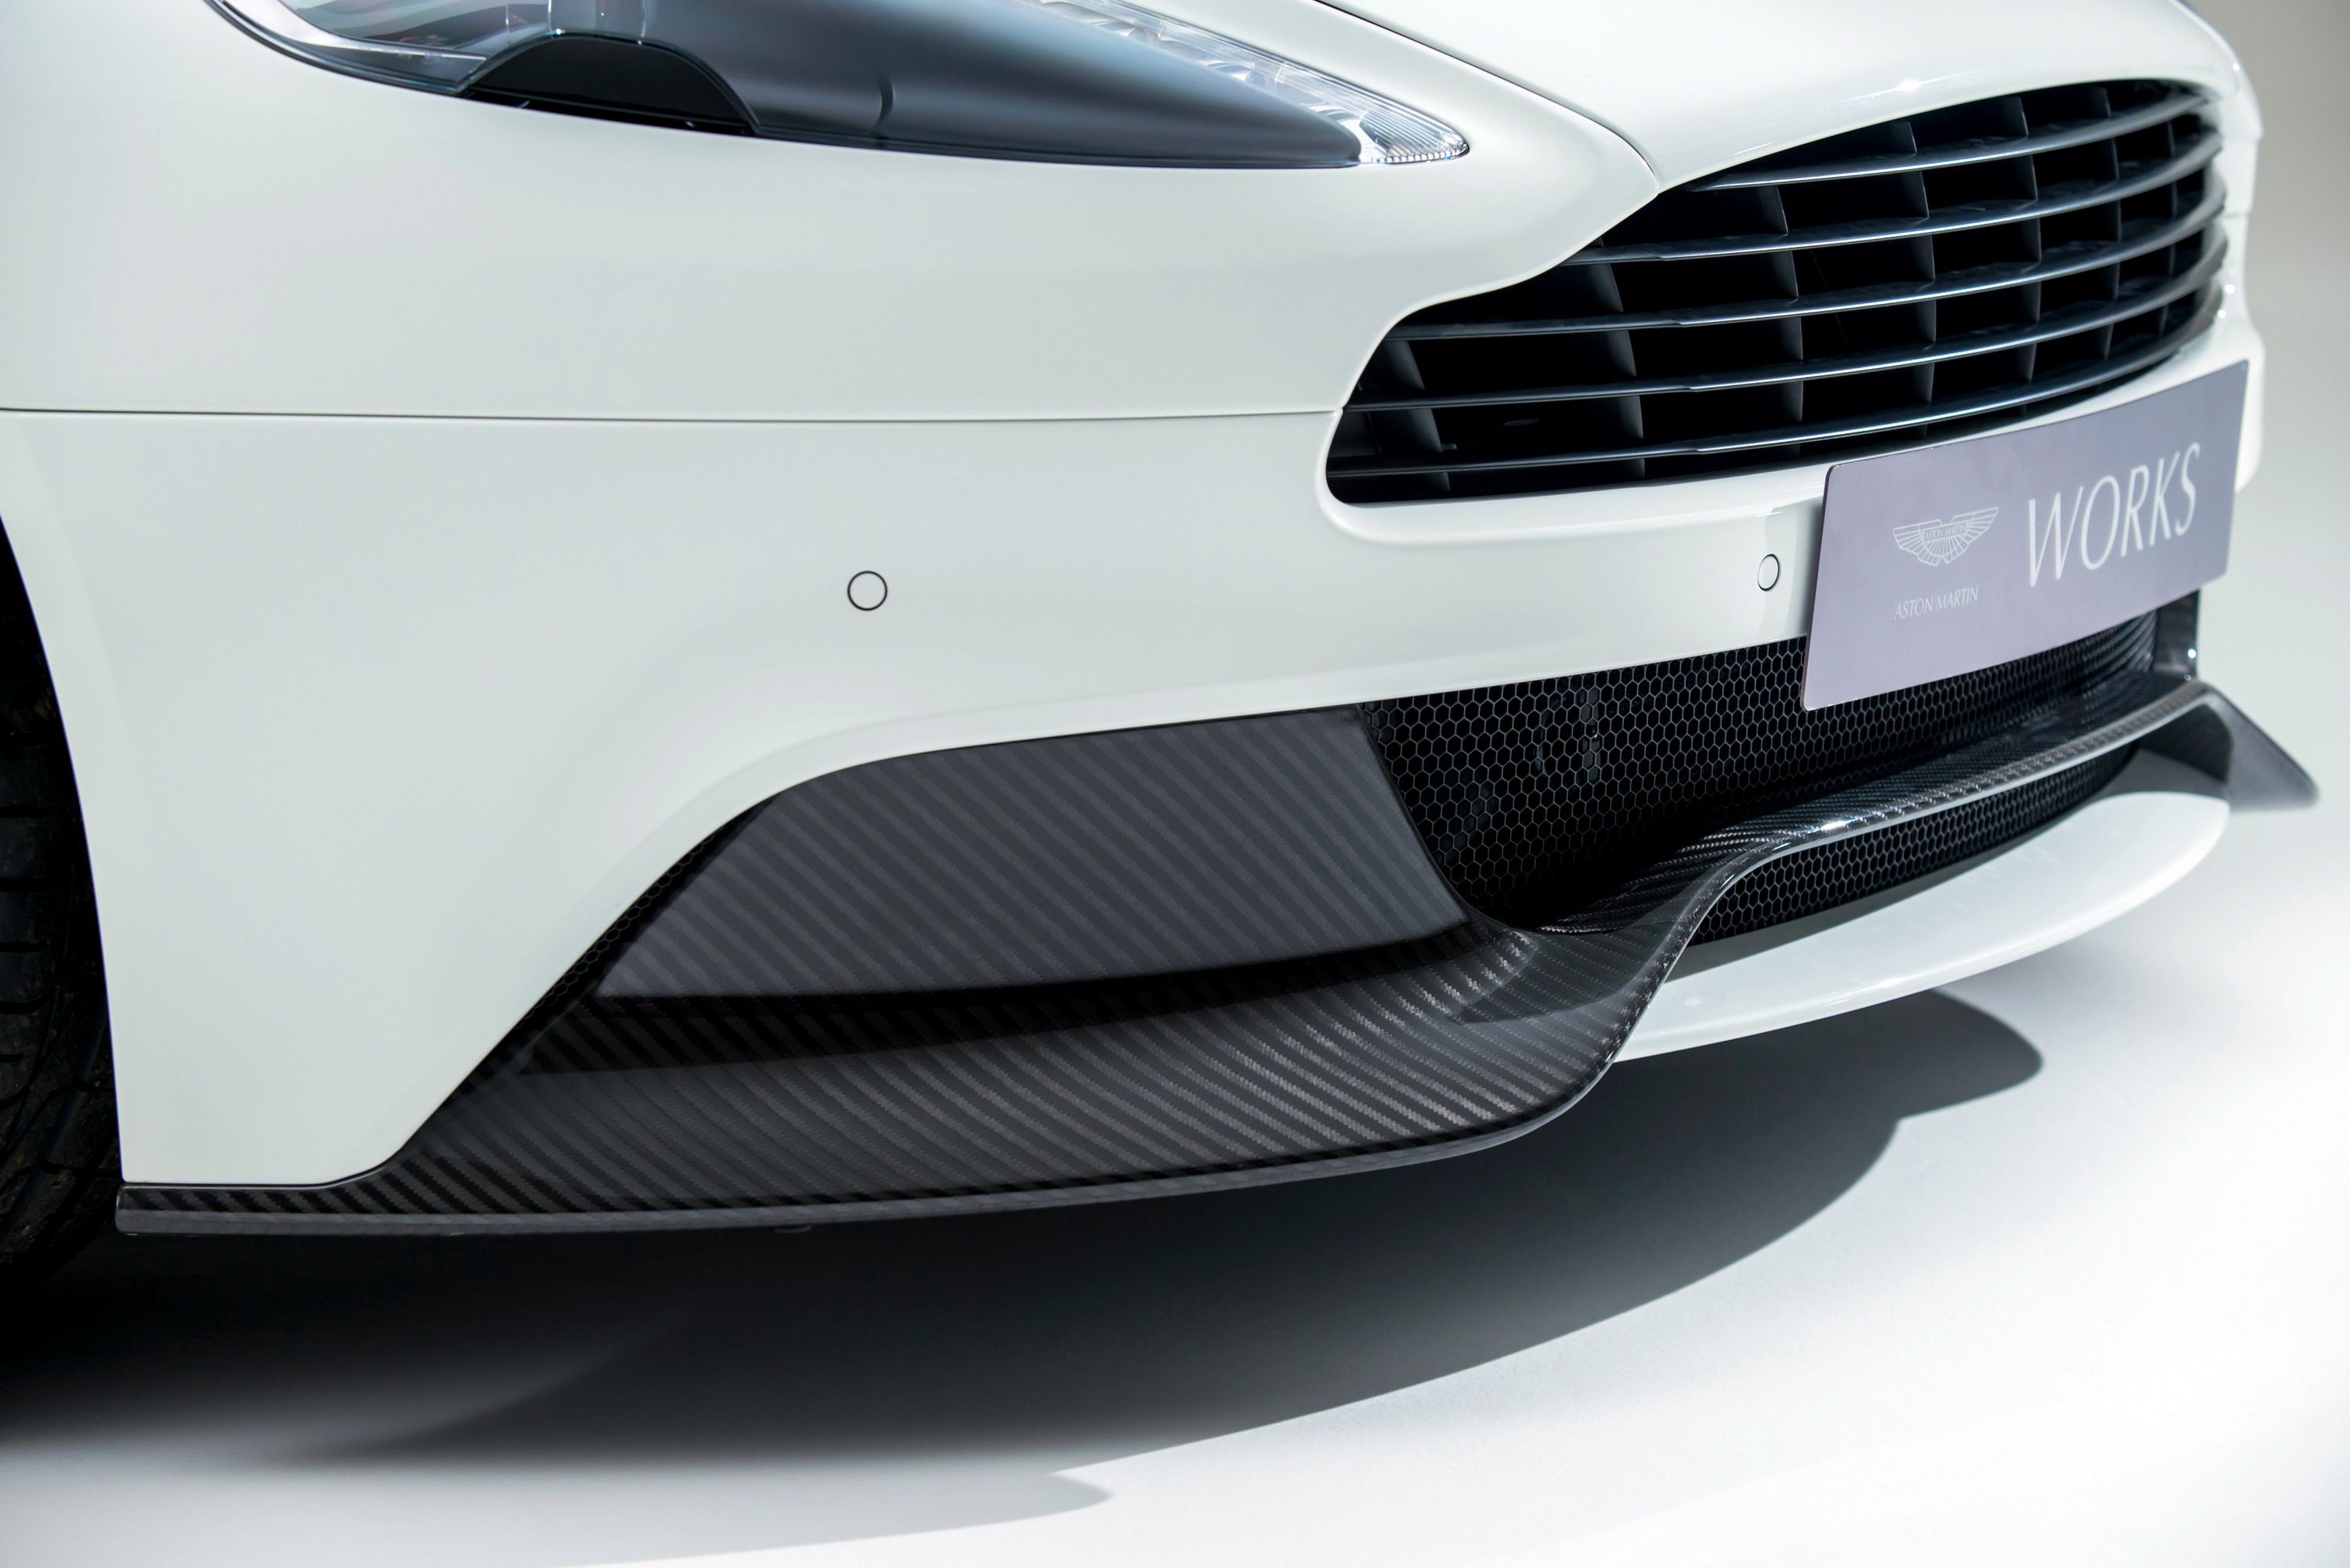 2015 Aston Martin Works 60th Anniversary Limited Edition Vanquish